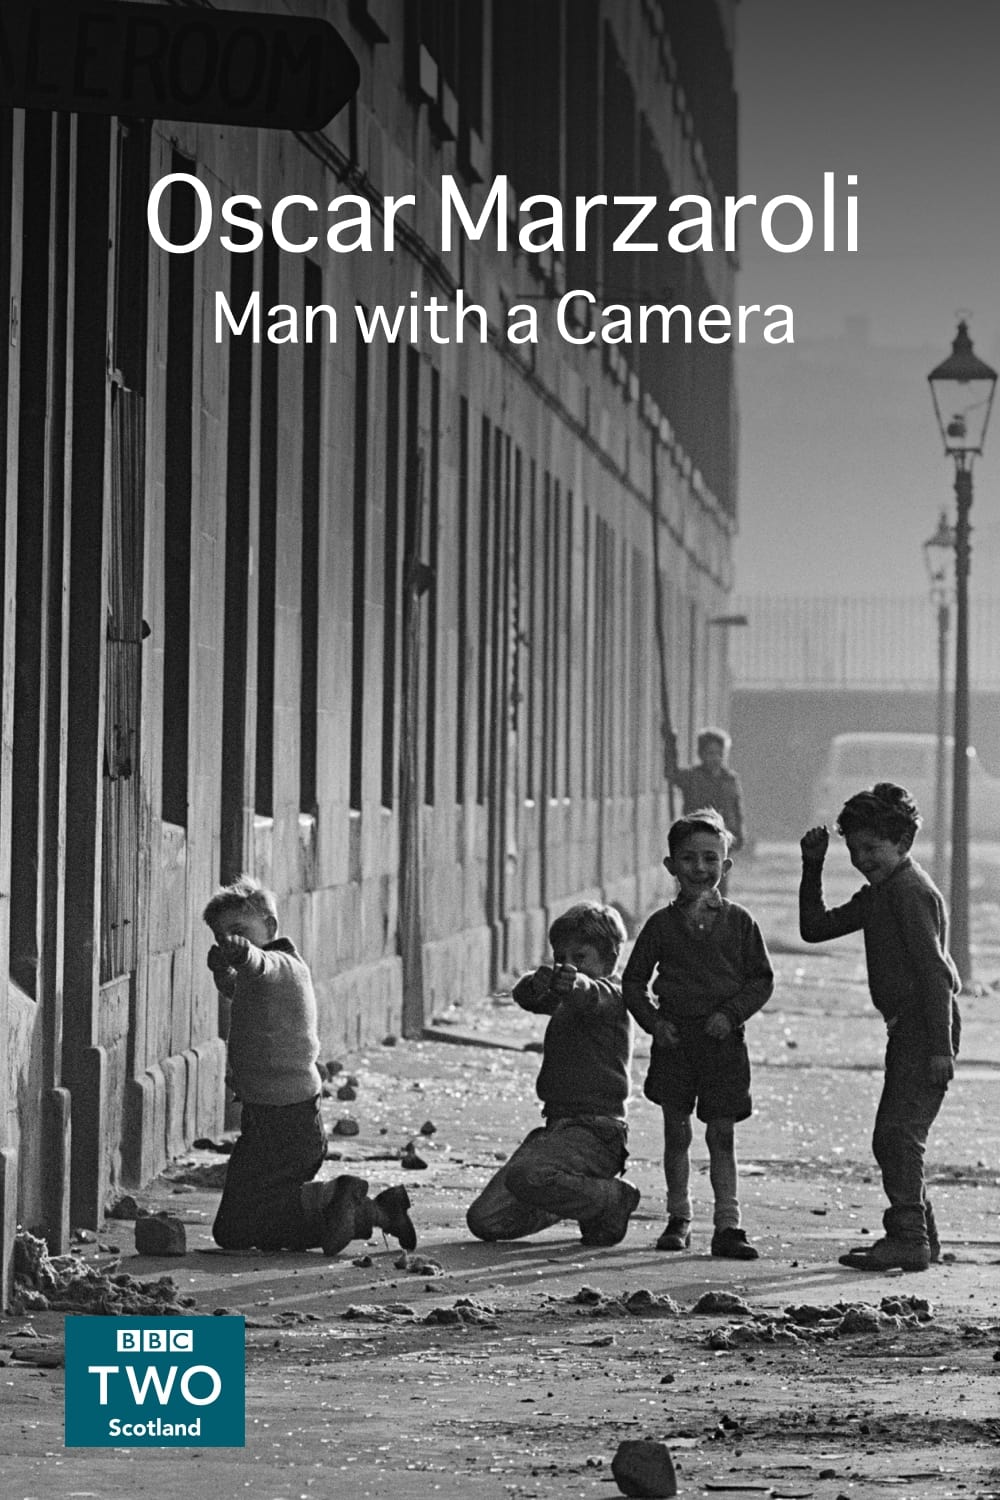 Oscar Marzaroli - Man with a Camera